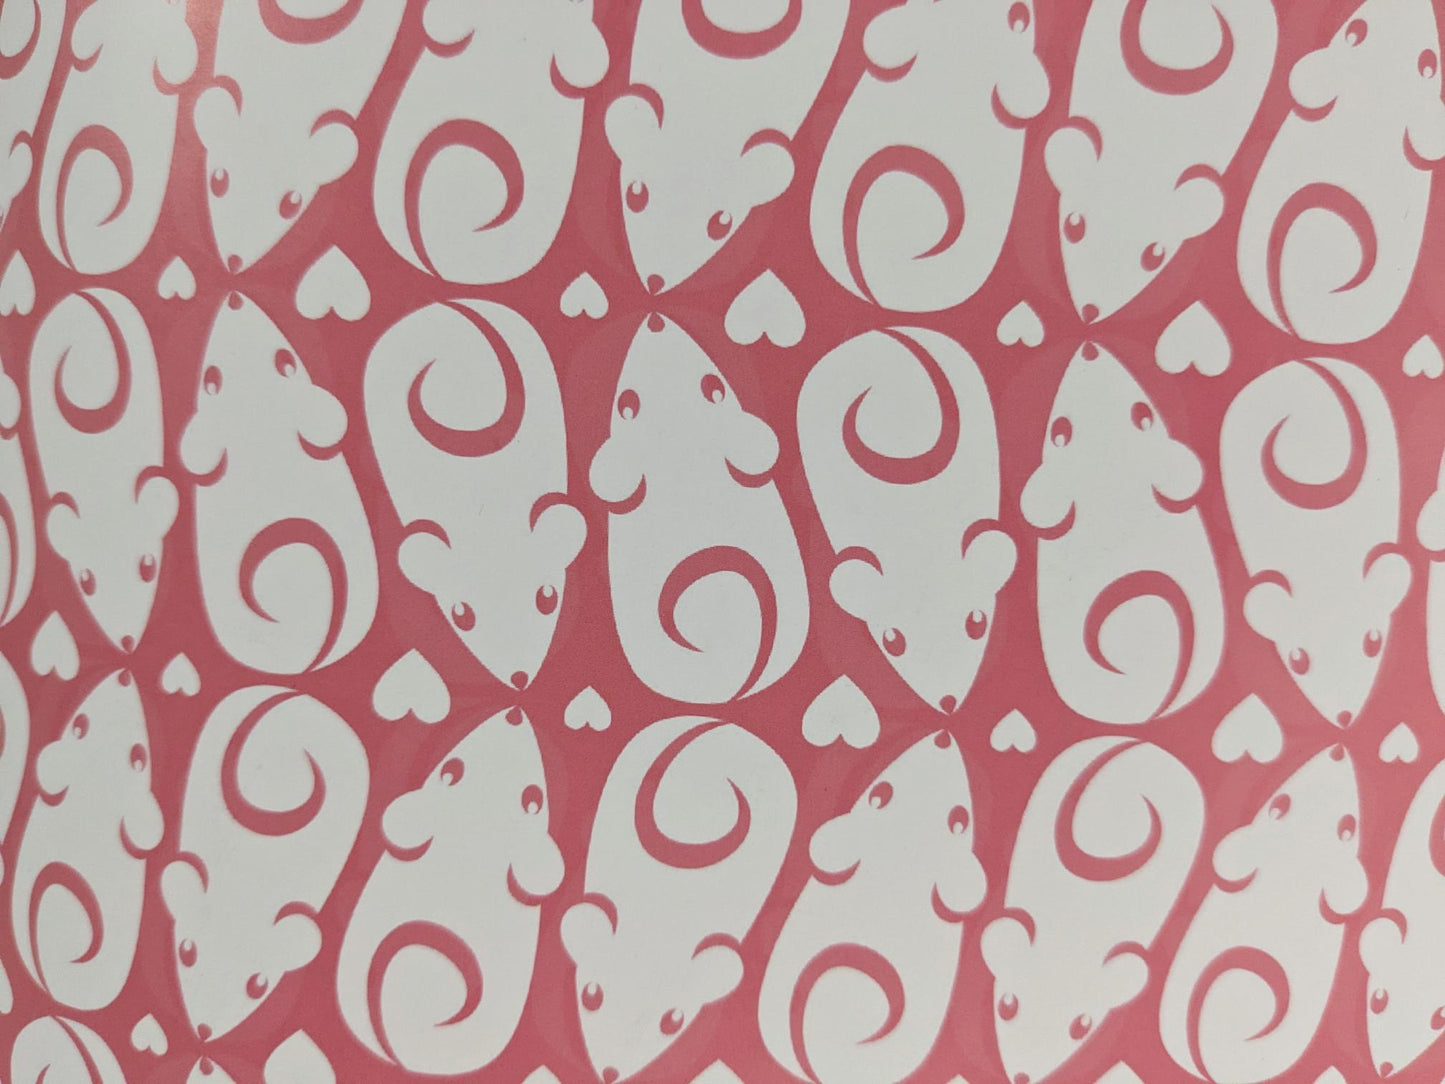 Sugar Mice and Love Hearts Fabric and Wallpaper